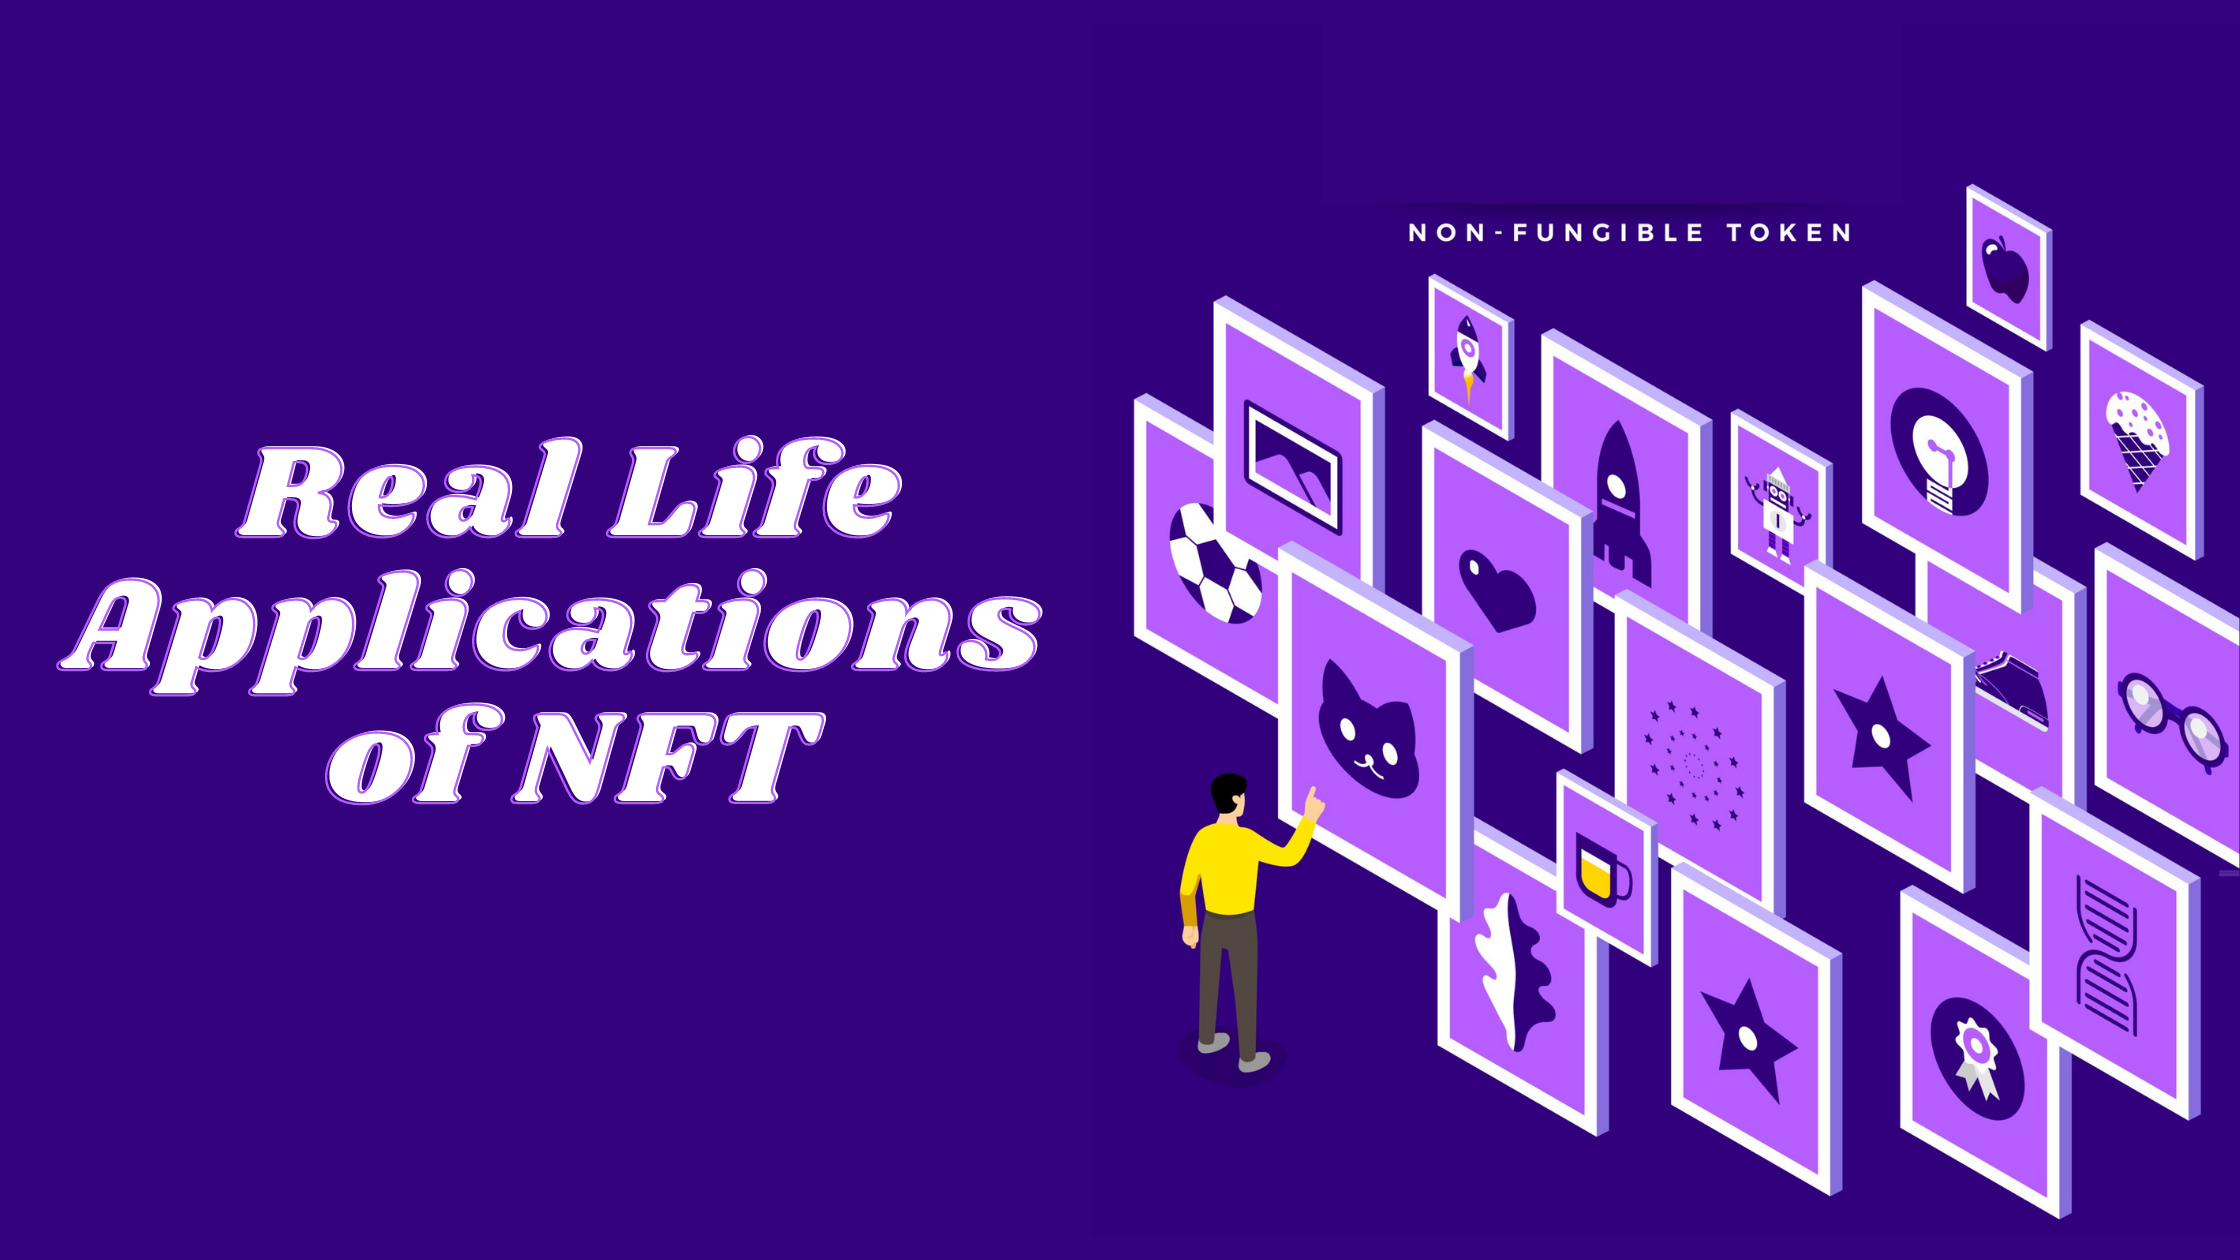 NFT applications